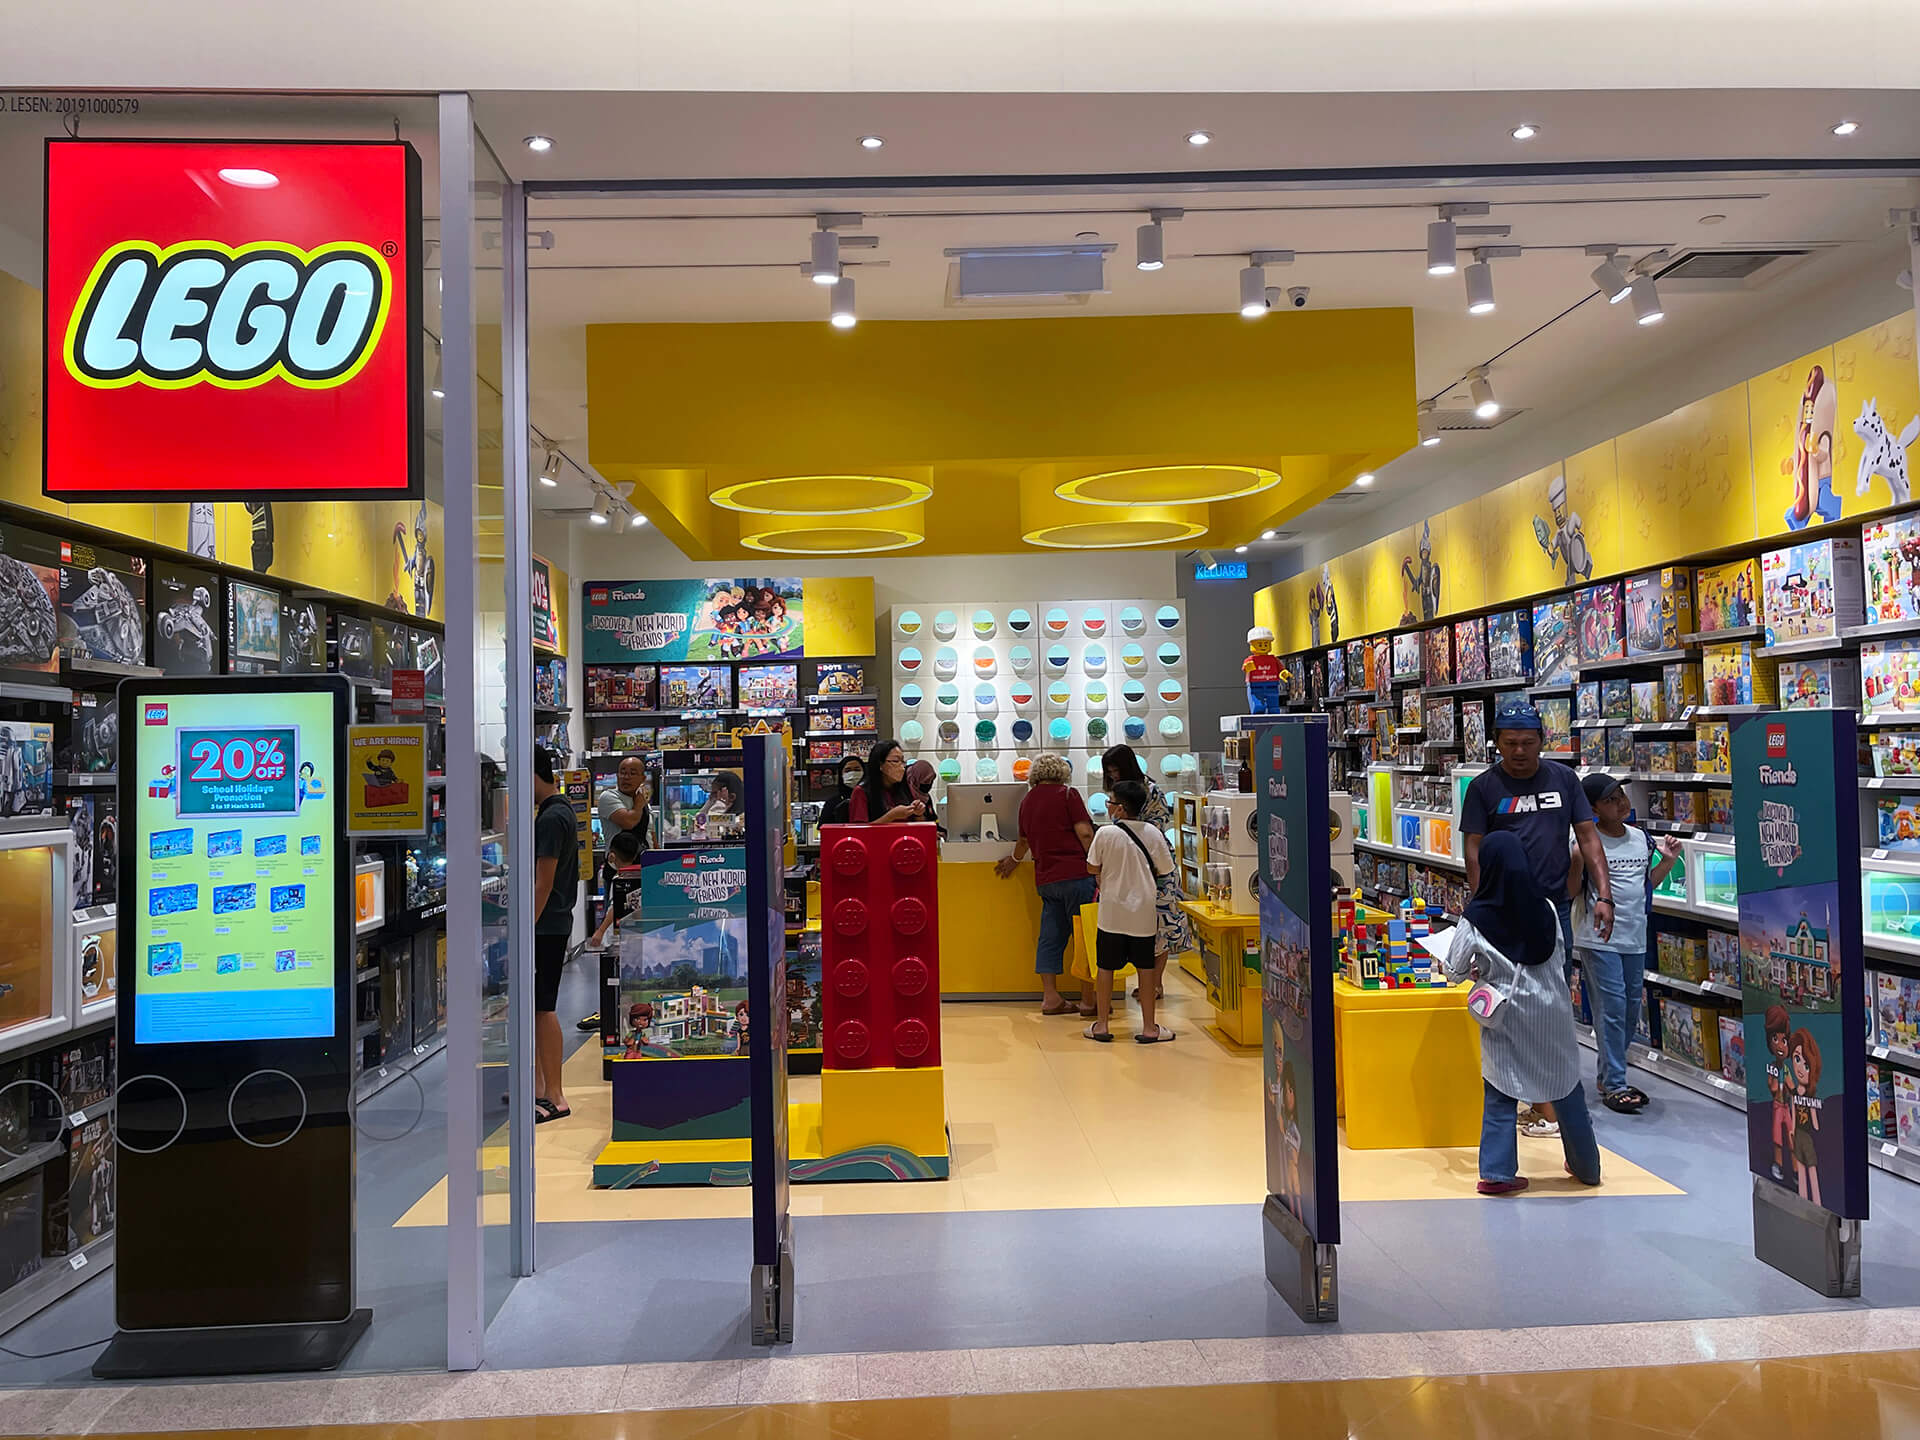 Every child’s dream store – LEGO.